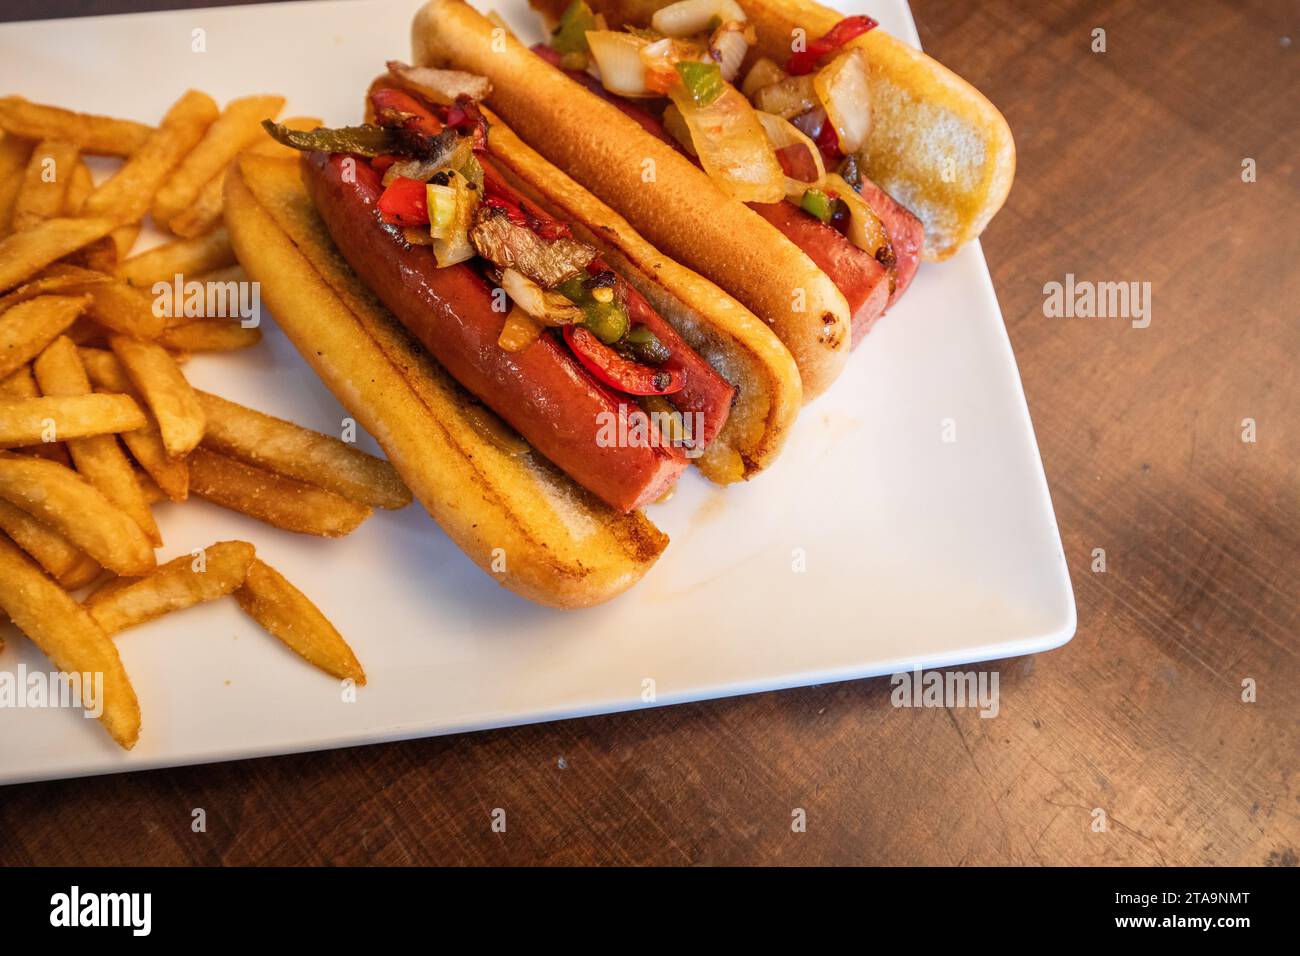 Sausage Dog with Veggies Stock Photo